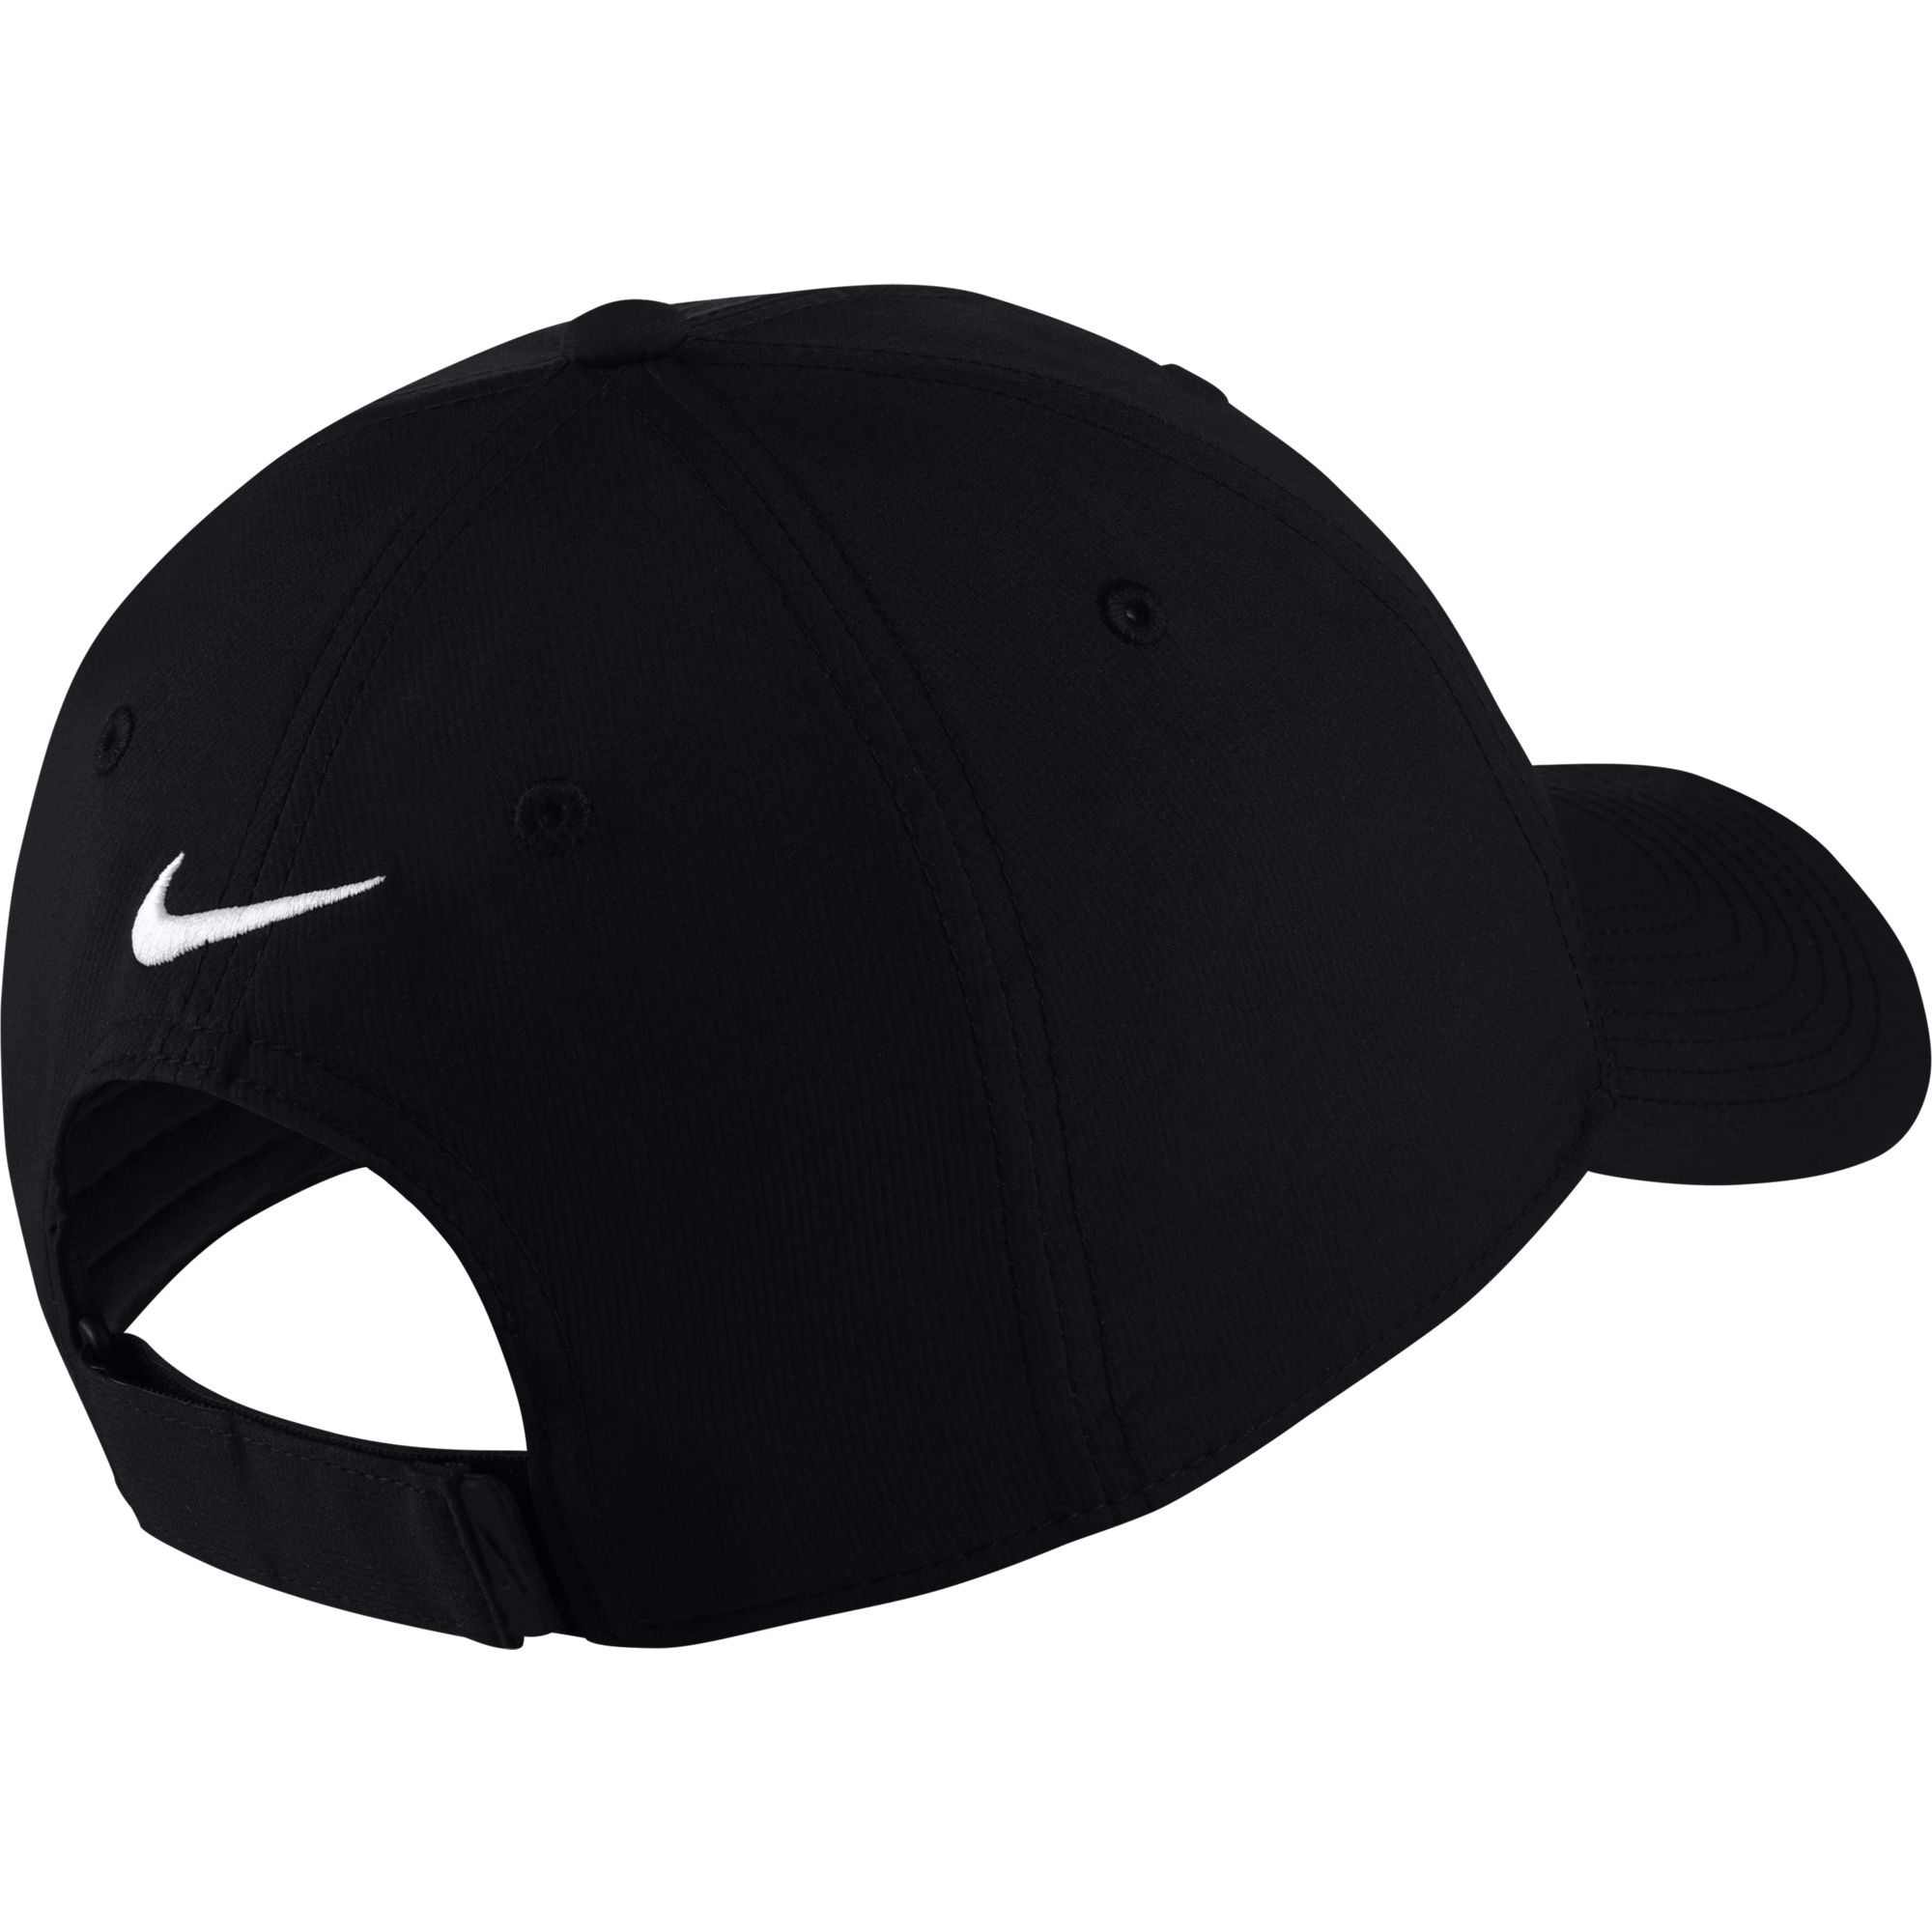 Nike Tech Golf Black/White Swoosh Cap - image 2 of 4